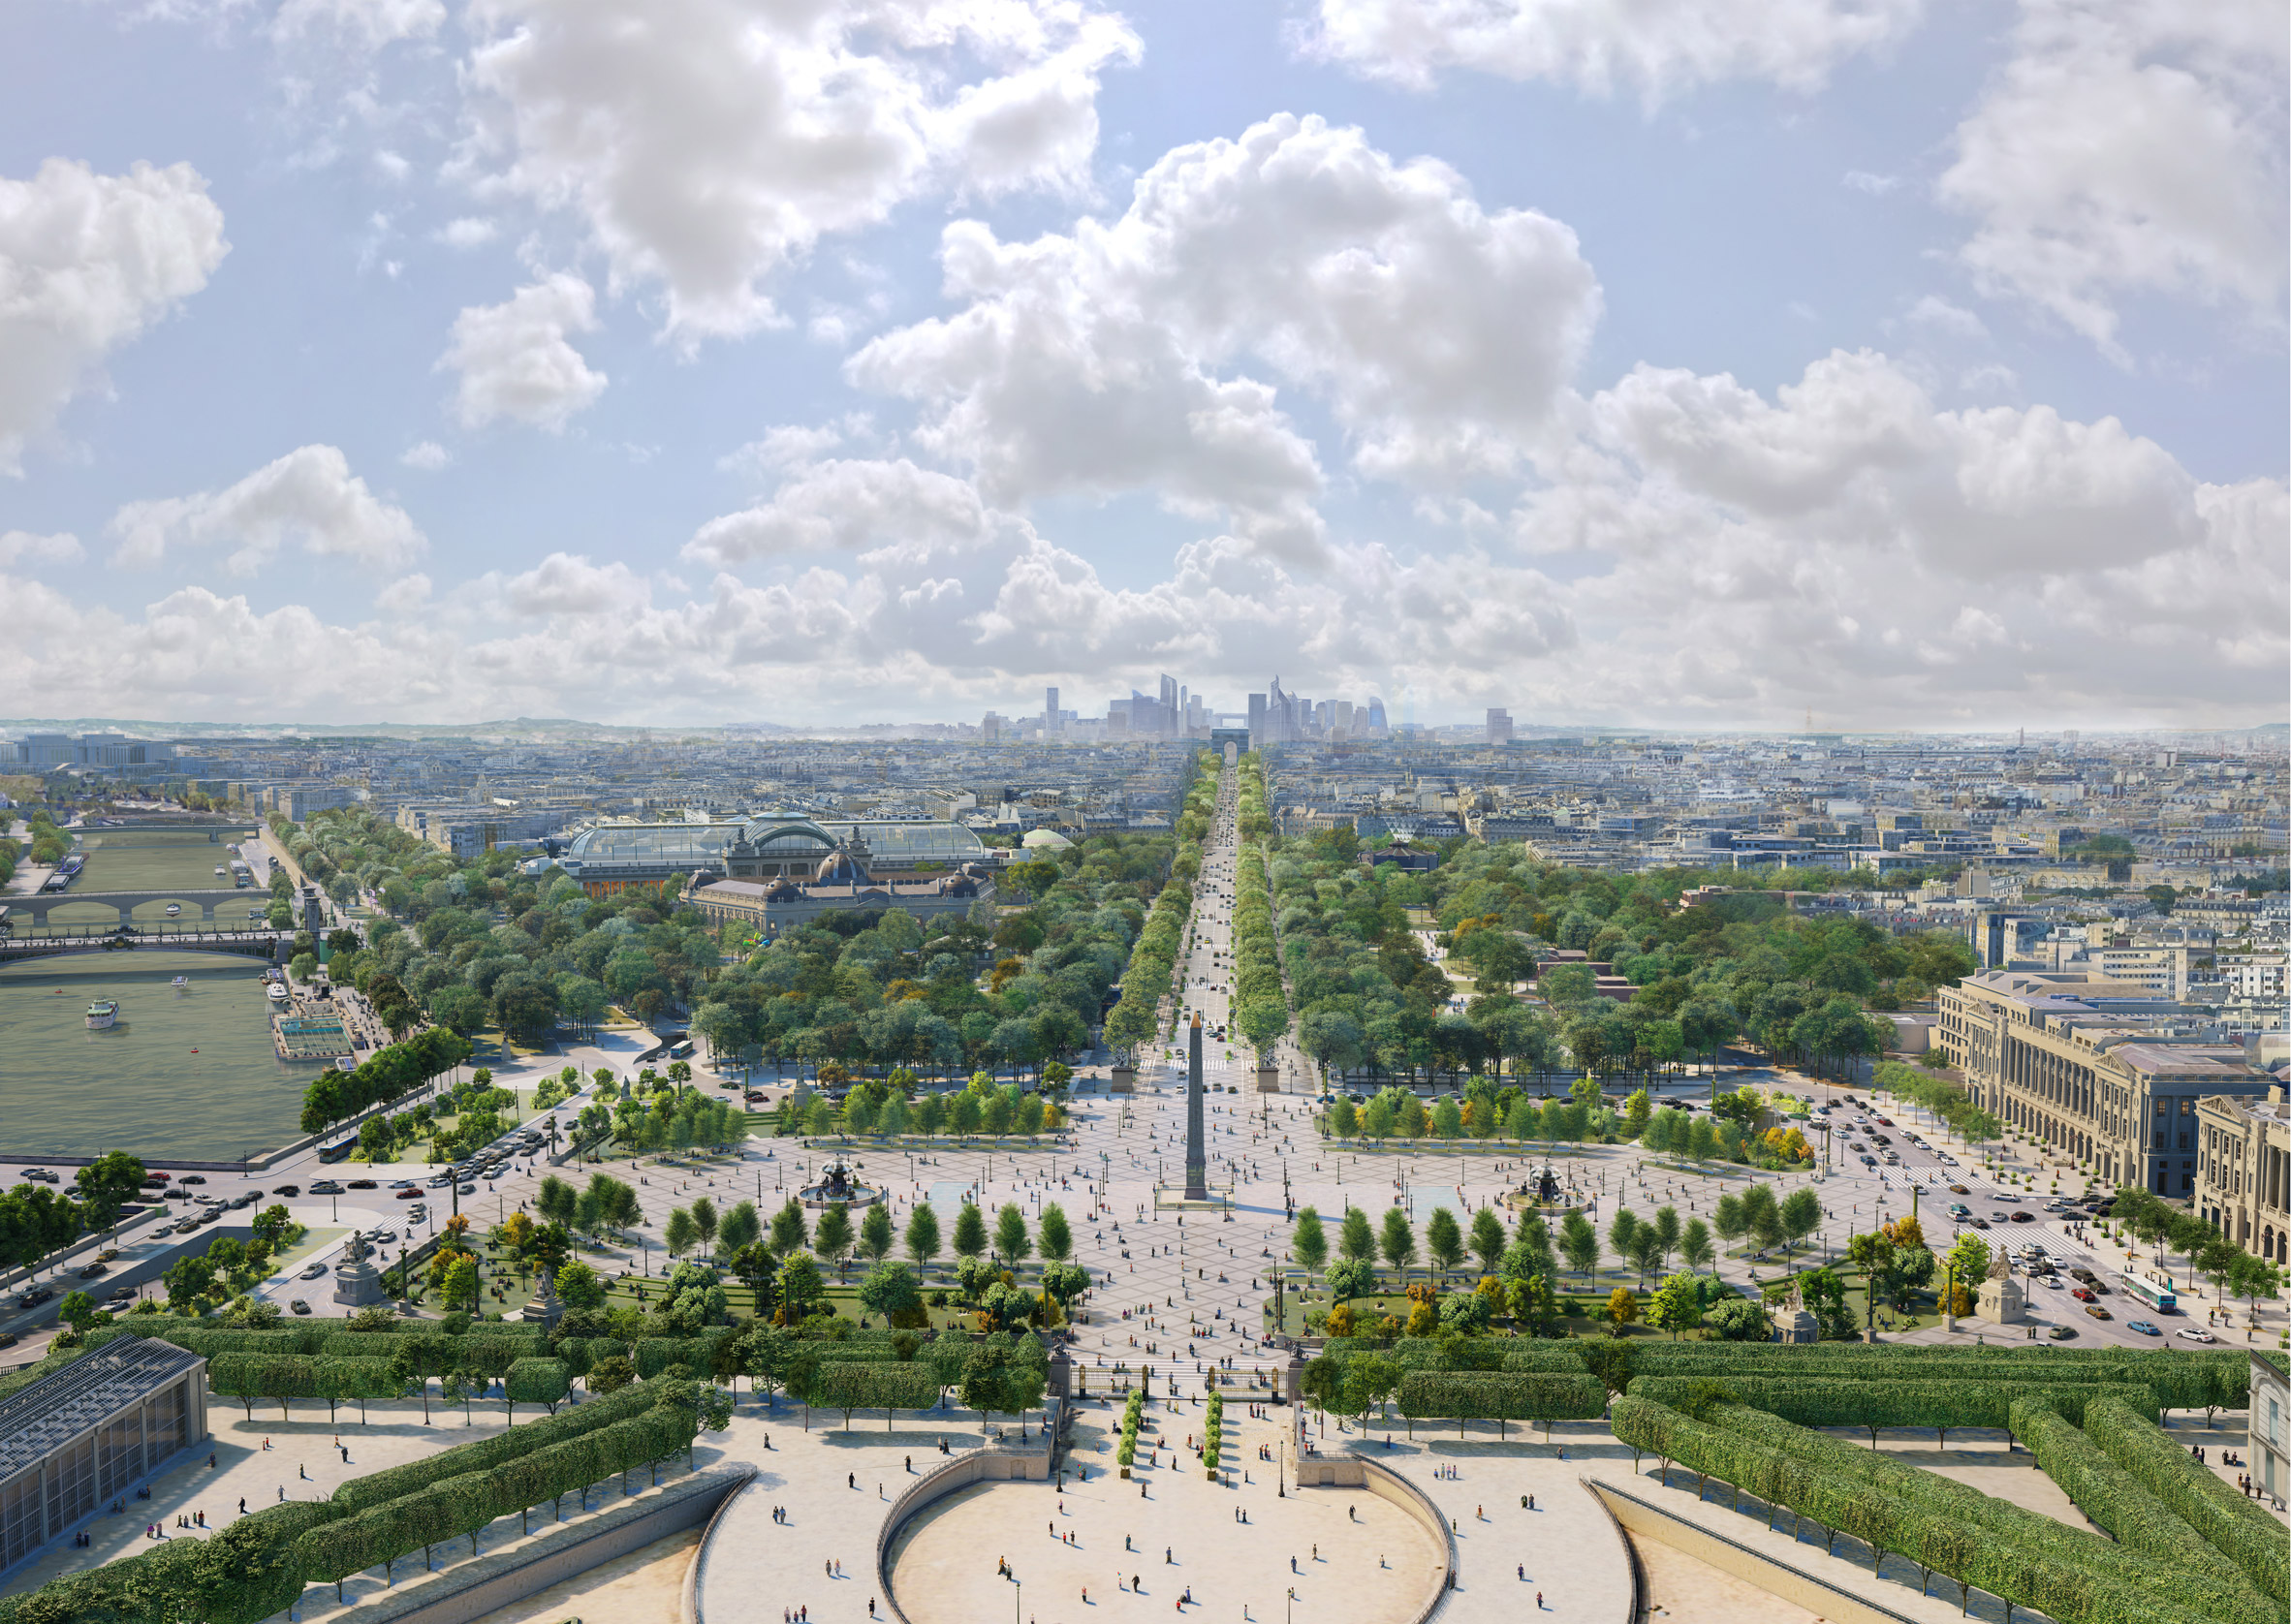 Champs-Élysées avenue in Paris to become an extraordinary garden